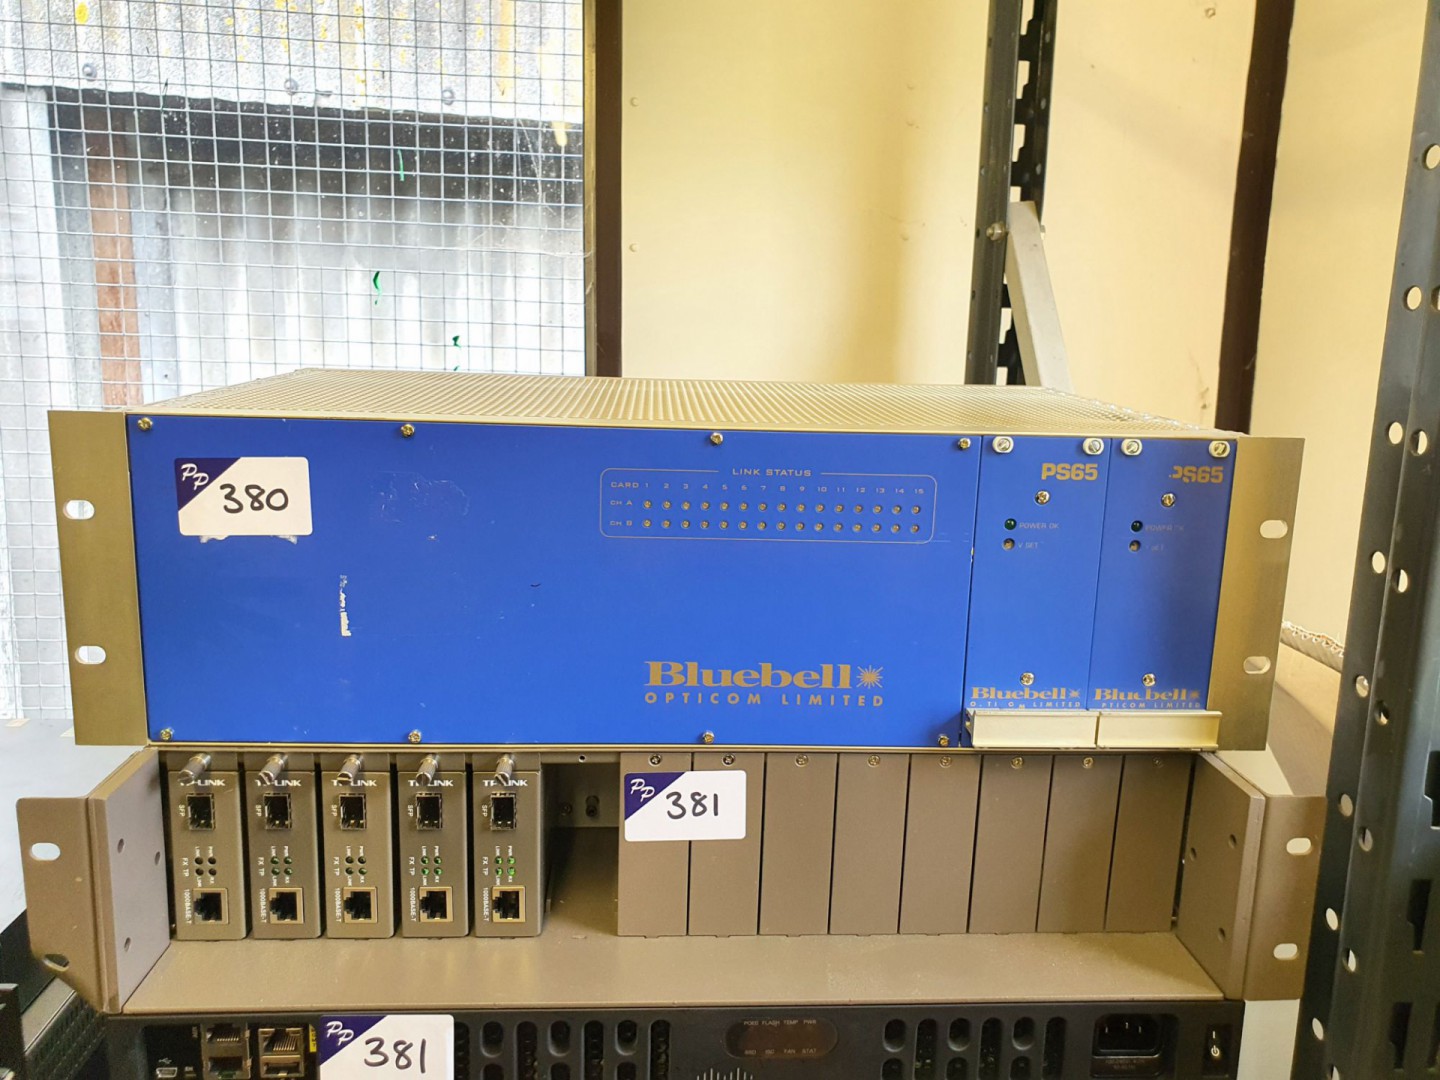 Bluebell Opticom Ltd 15 slot chassis, PS65 PSU